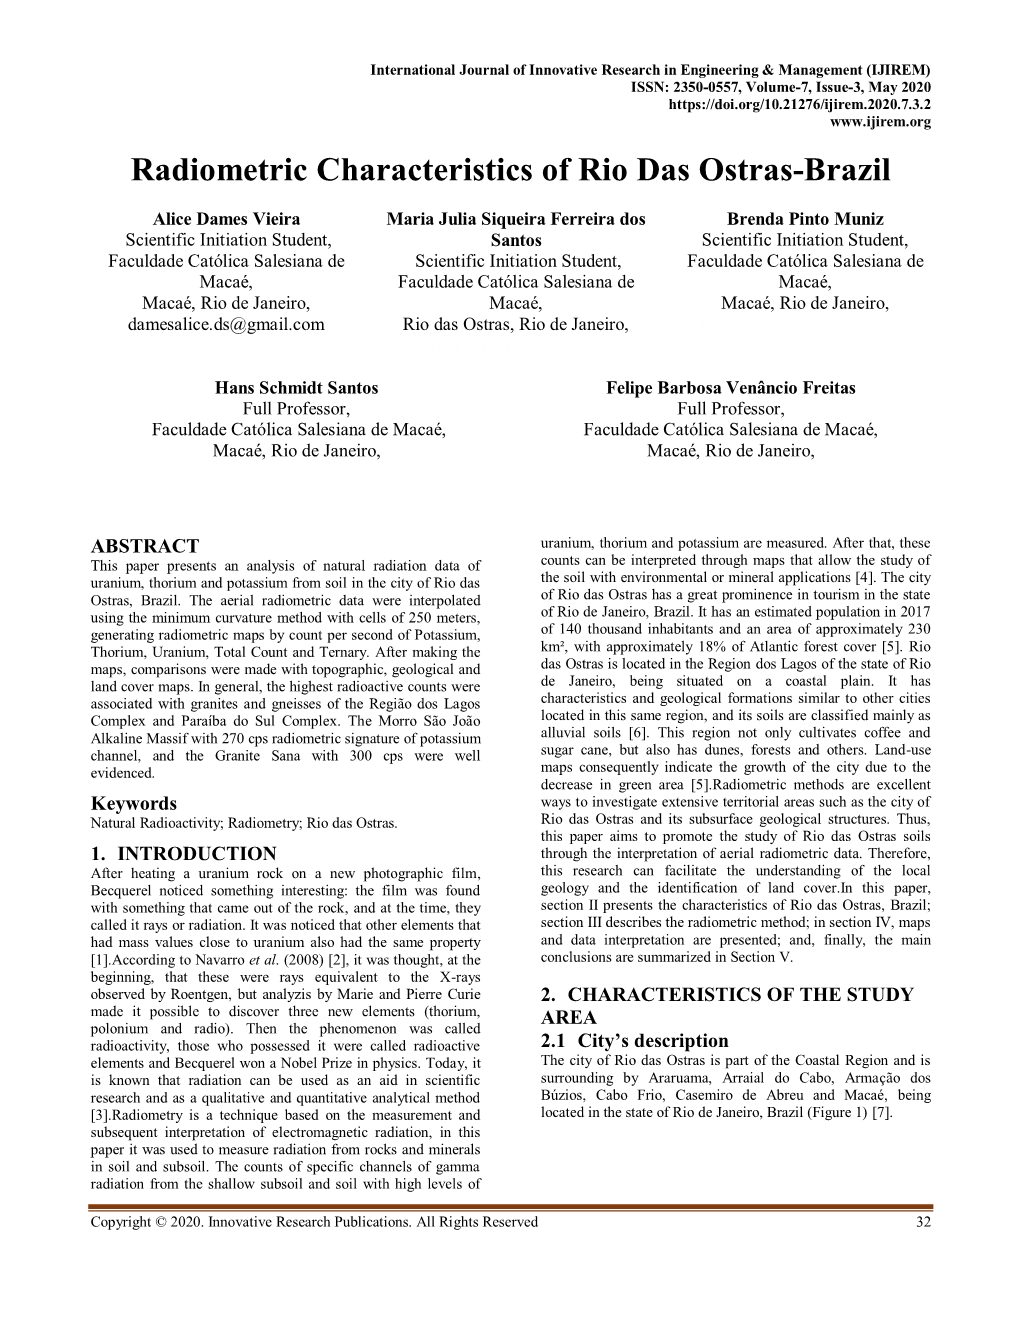 Radiometric Characteristics of Rio Das Ostras-Brazil